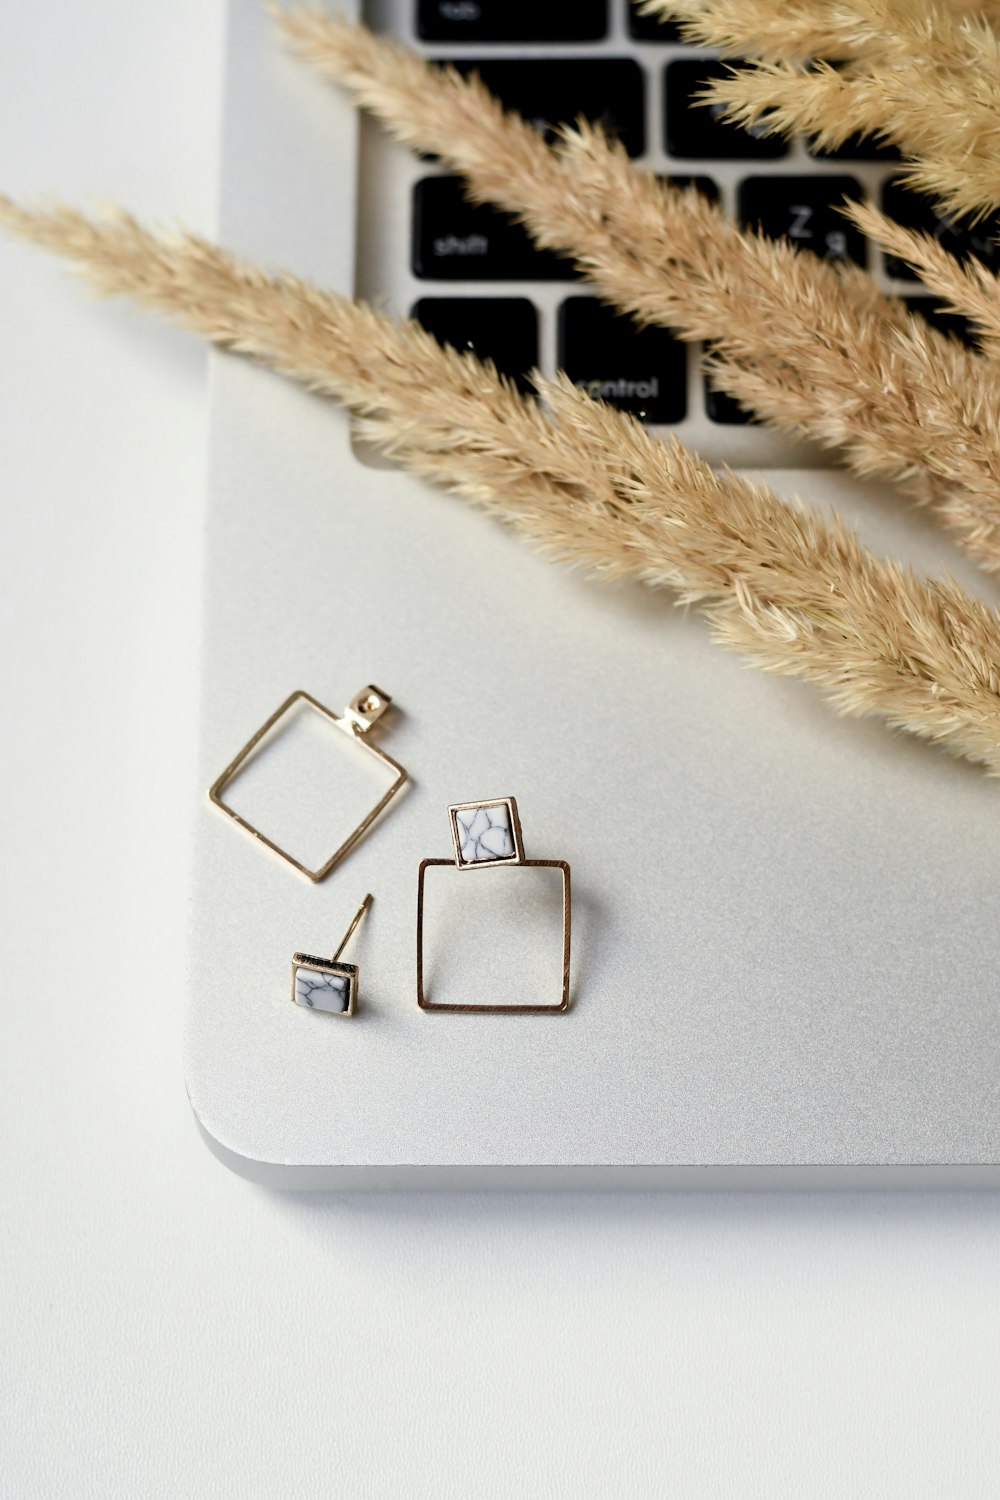 gold earrings on MacBook